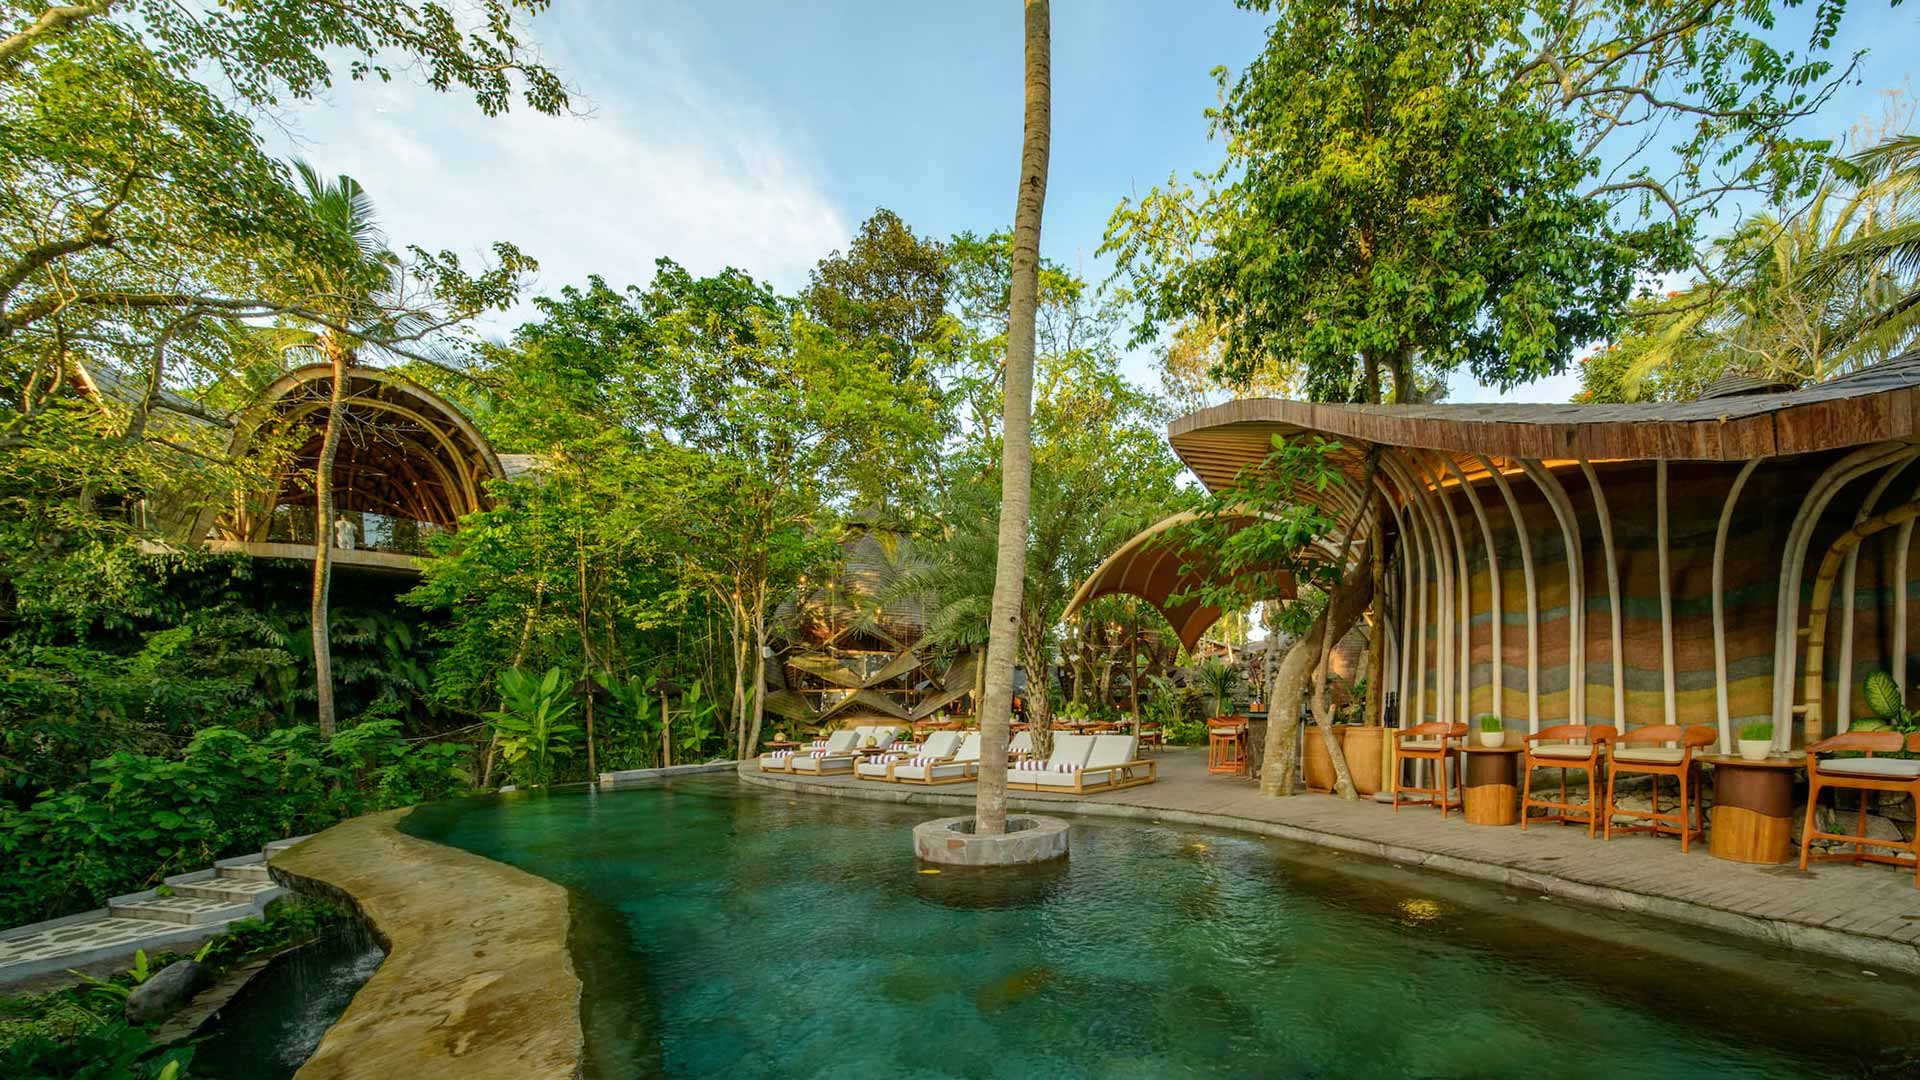 Hotels of the world: Ulaman Eco Luxury Resort, Bali